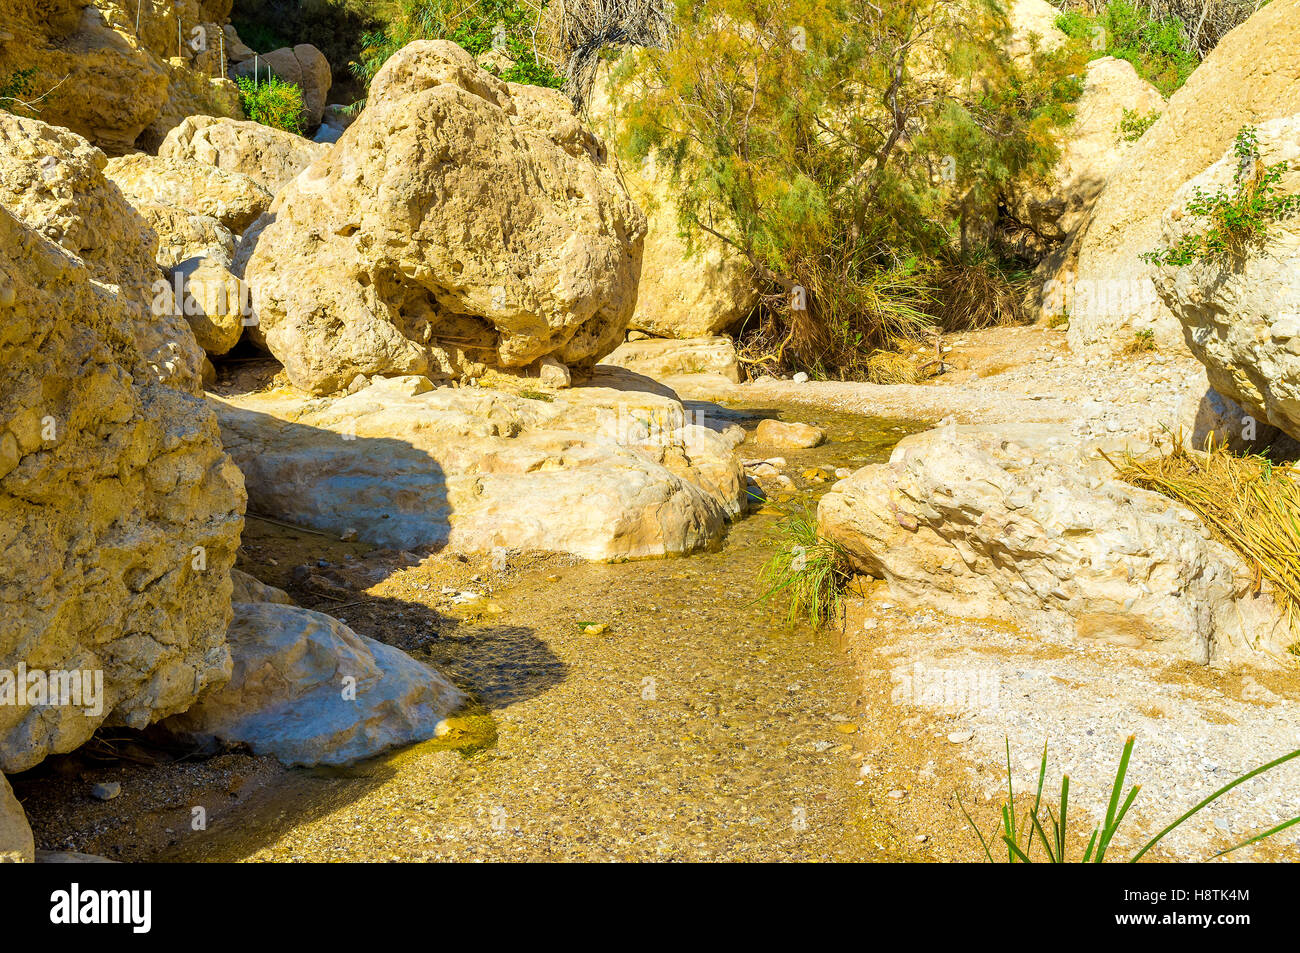 The narrow spring in Ein Gedi oasis, located in Judean desert, Israel. Stock Photo